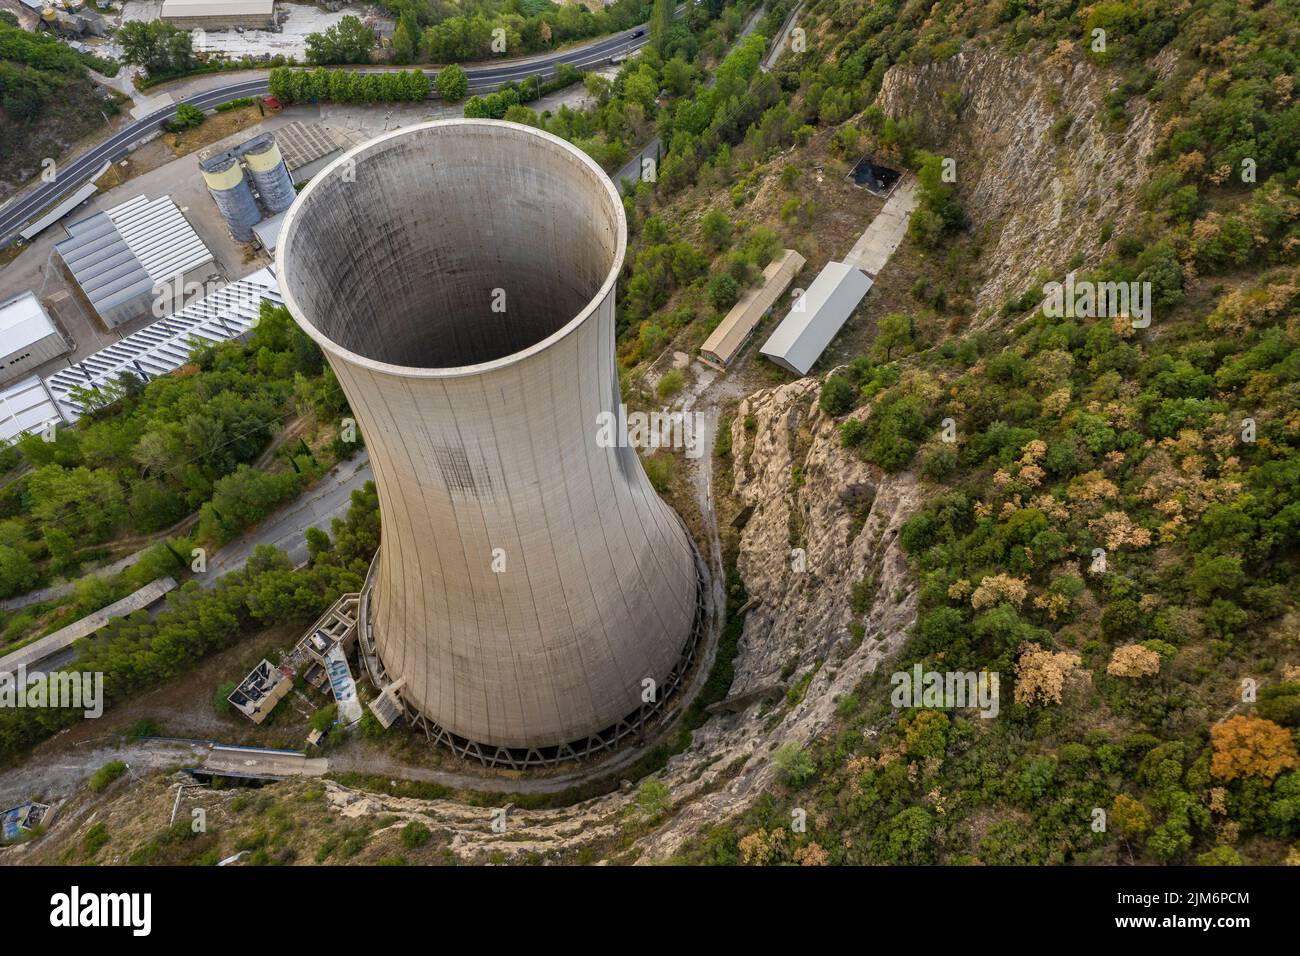 Ehemaliges Cercs-Thermalkraftwerk, derzeit außer Betrieb (Berguedà, Barcelona, Katalonien, Spanien) ESP: Antigua Central térmica de Cercs, Berguedà Stockfoto